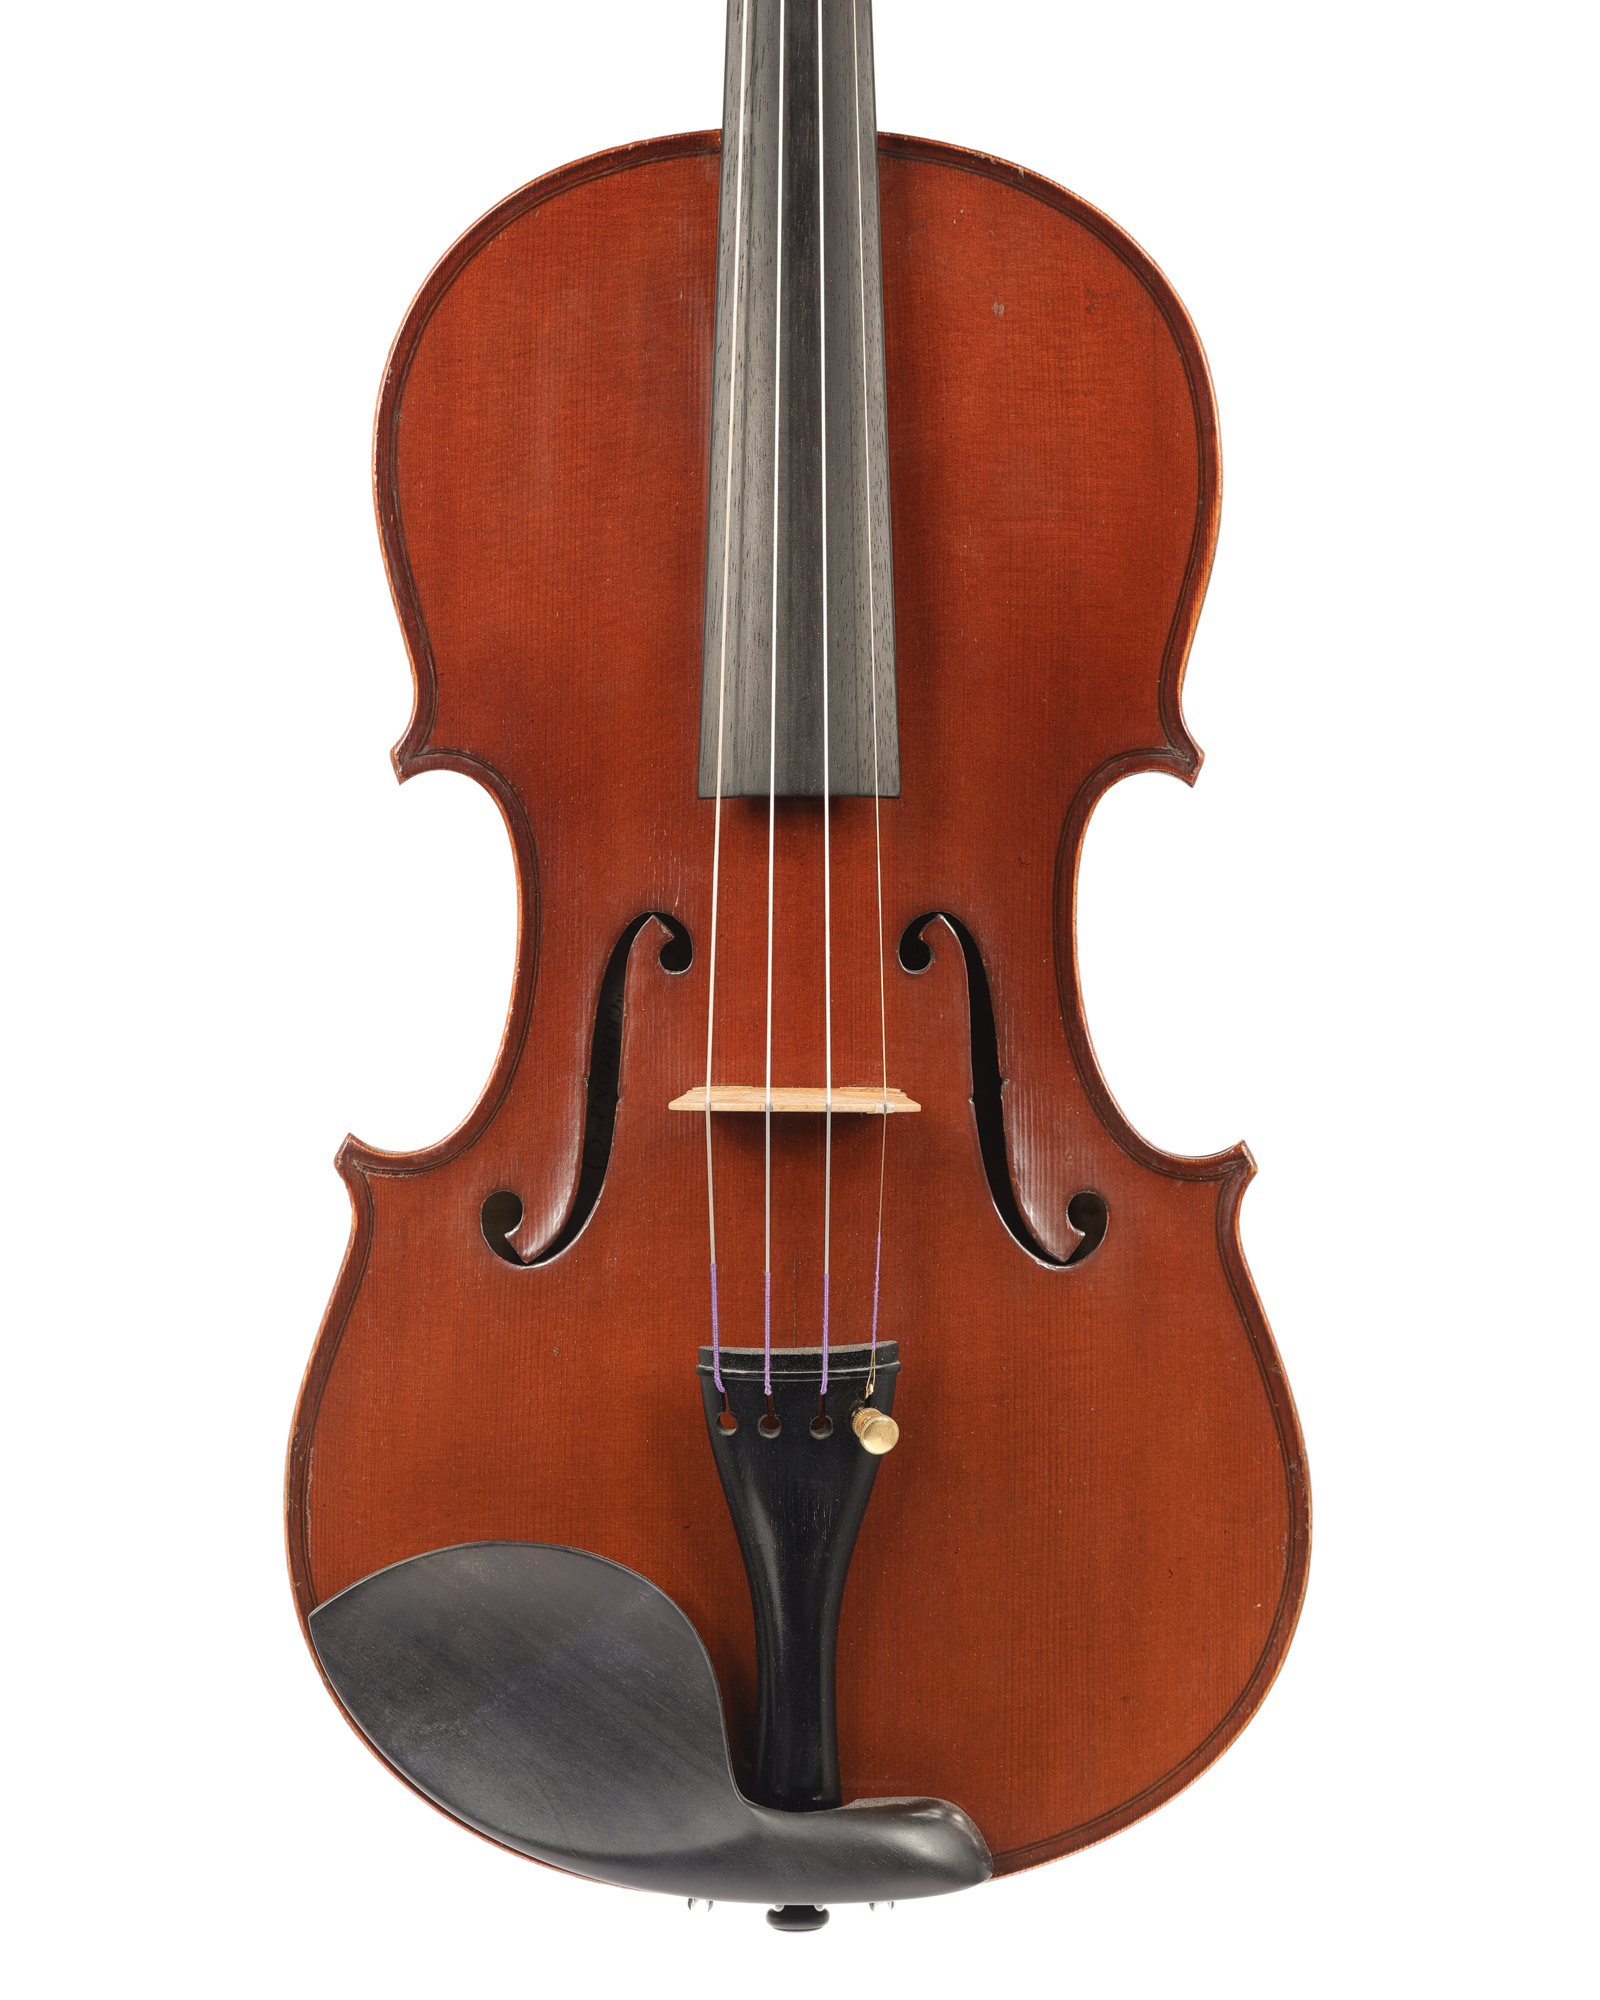 French French 4/4 violin labeled "Rudolph Wurlitzer CREMONA"